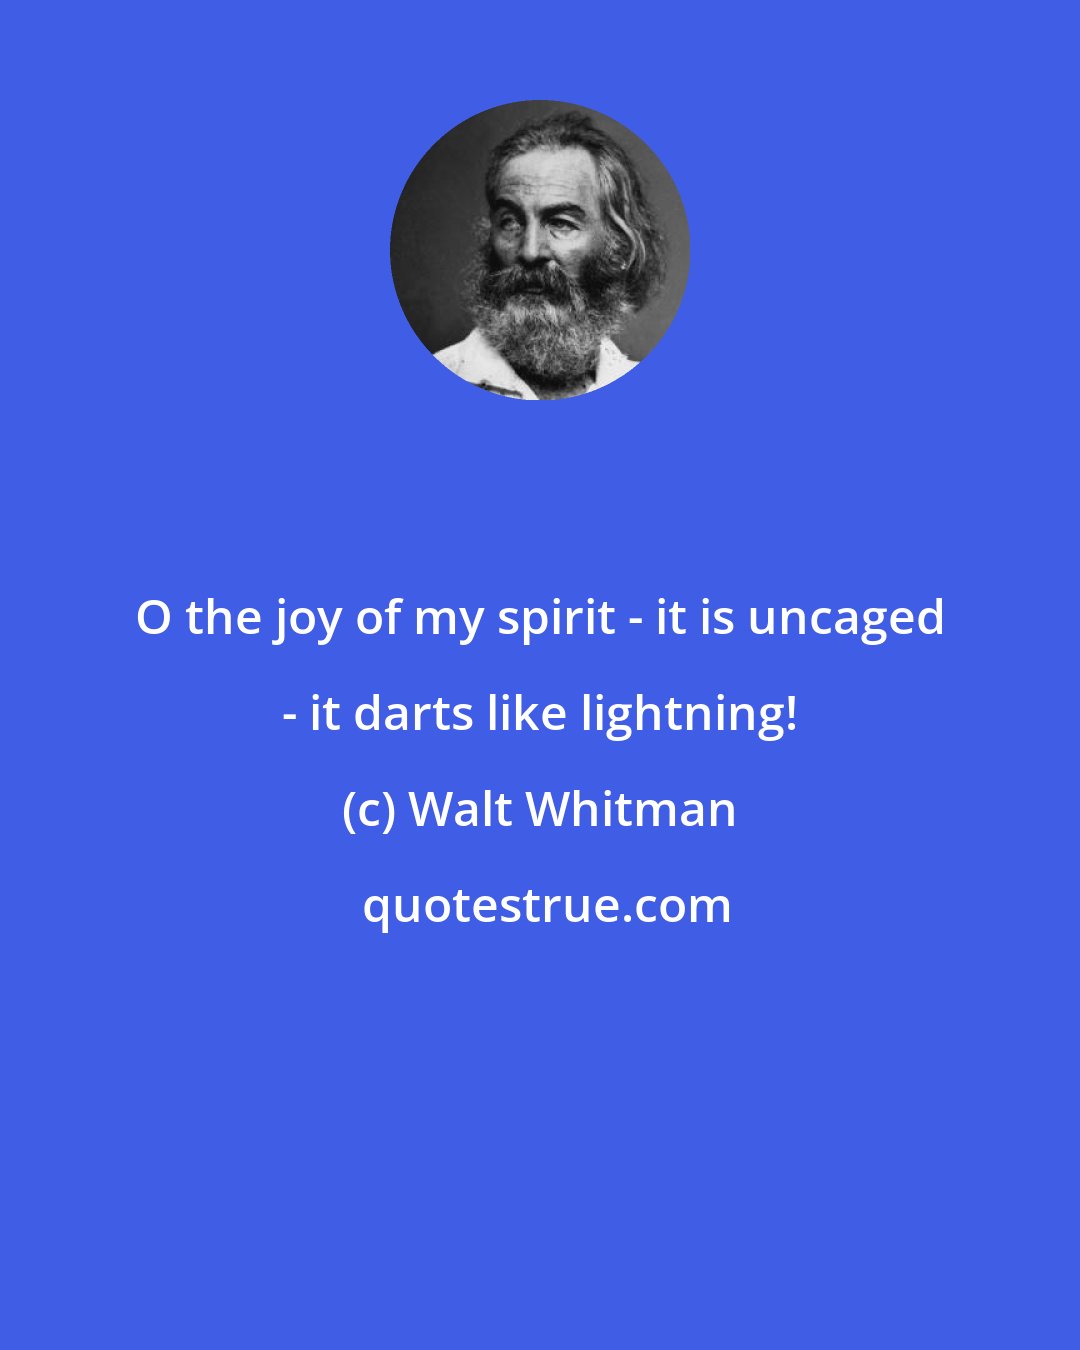 Walt Whitman: O the joy of my spirit - it is uncaged - it darts like lightning!